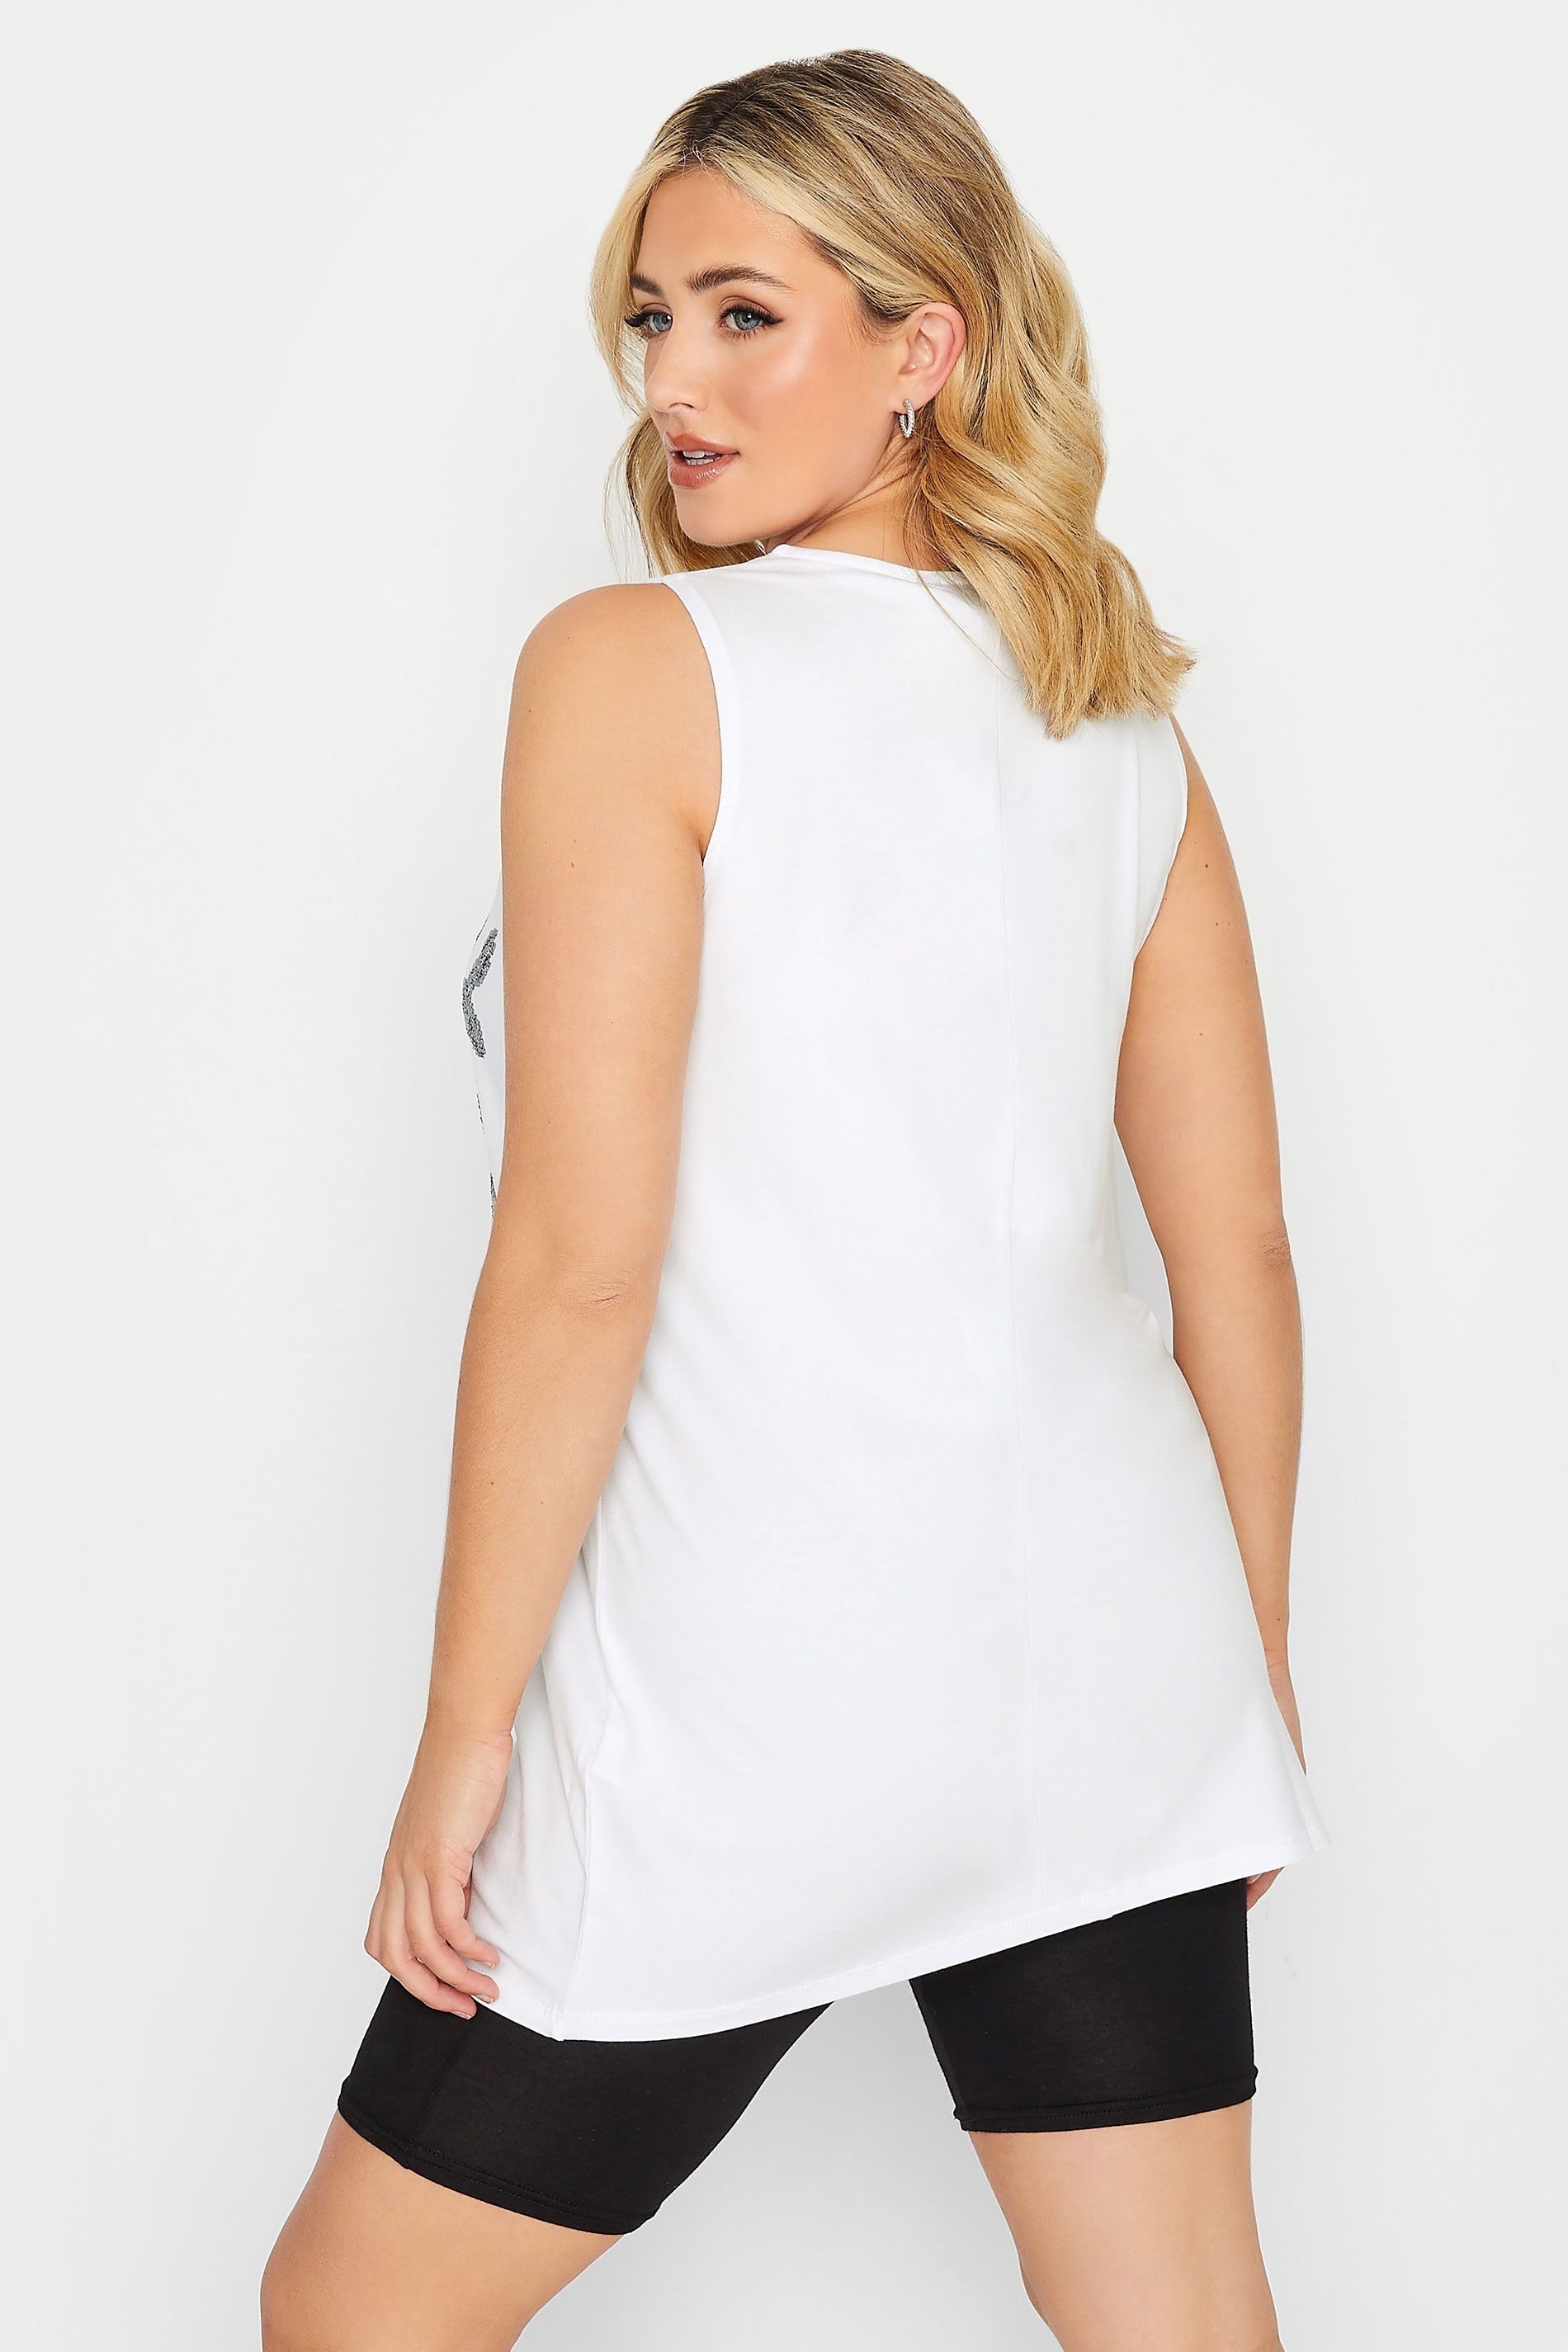 YOURS Plus Size White Leopard Print Sequin Vest Top | Yours Clothing 3